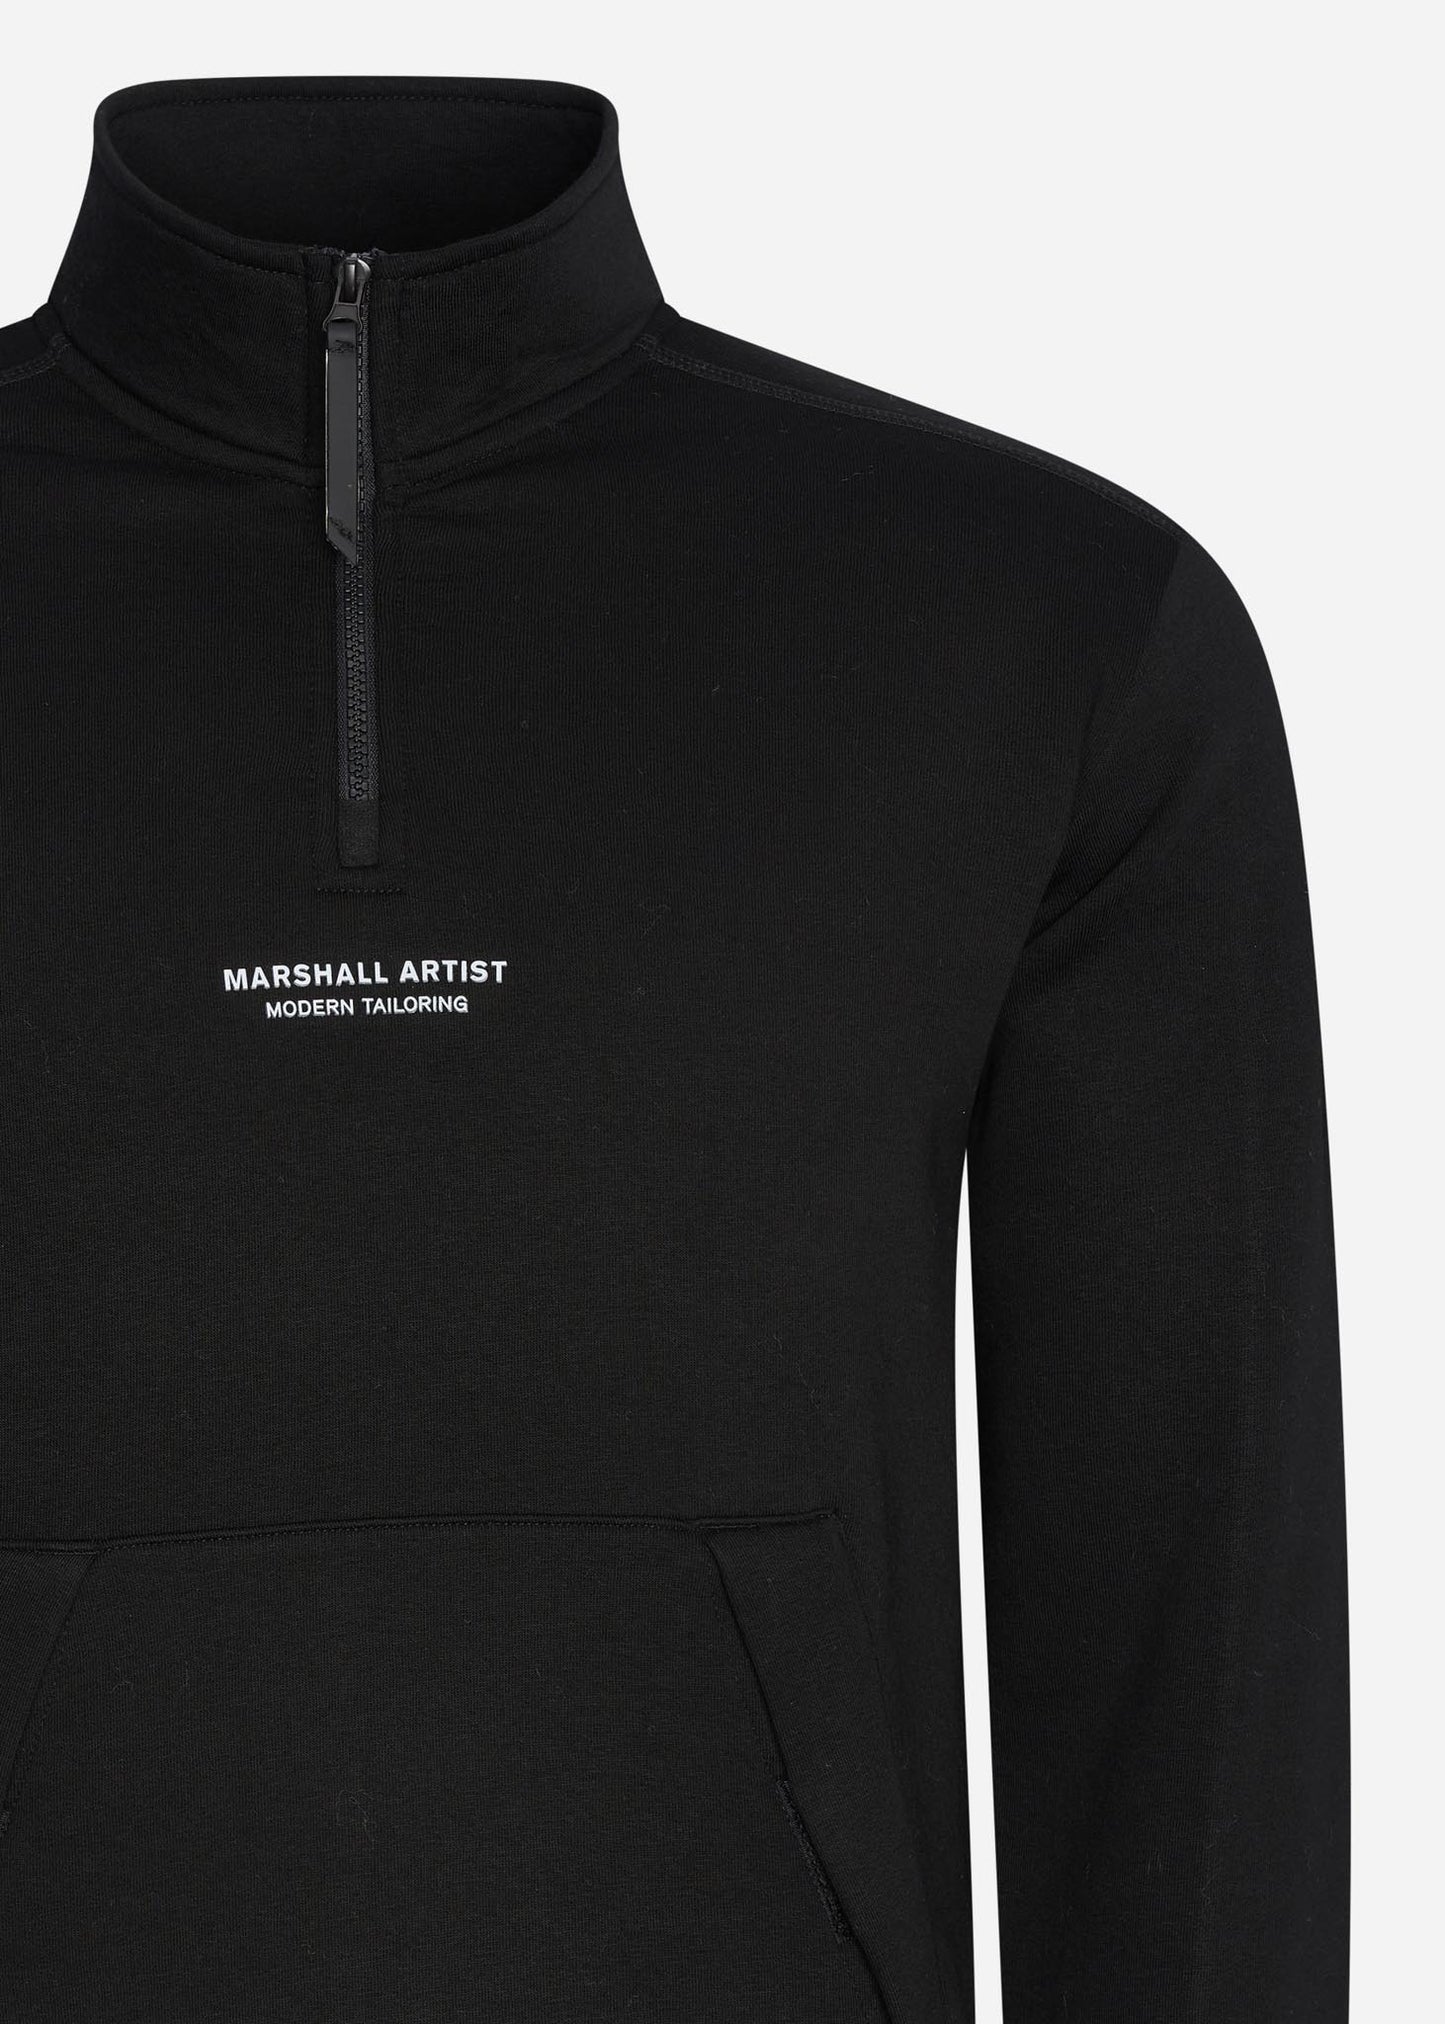 Marshall Artist quarter zip sweater black